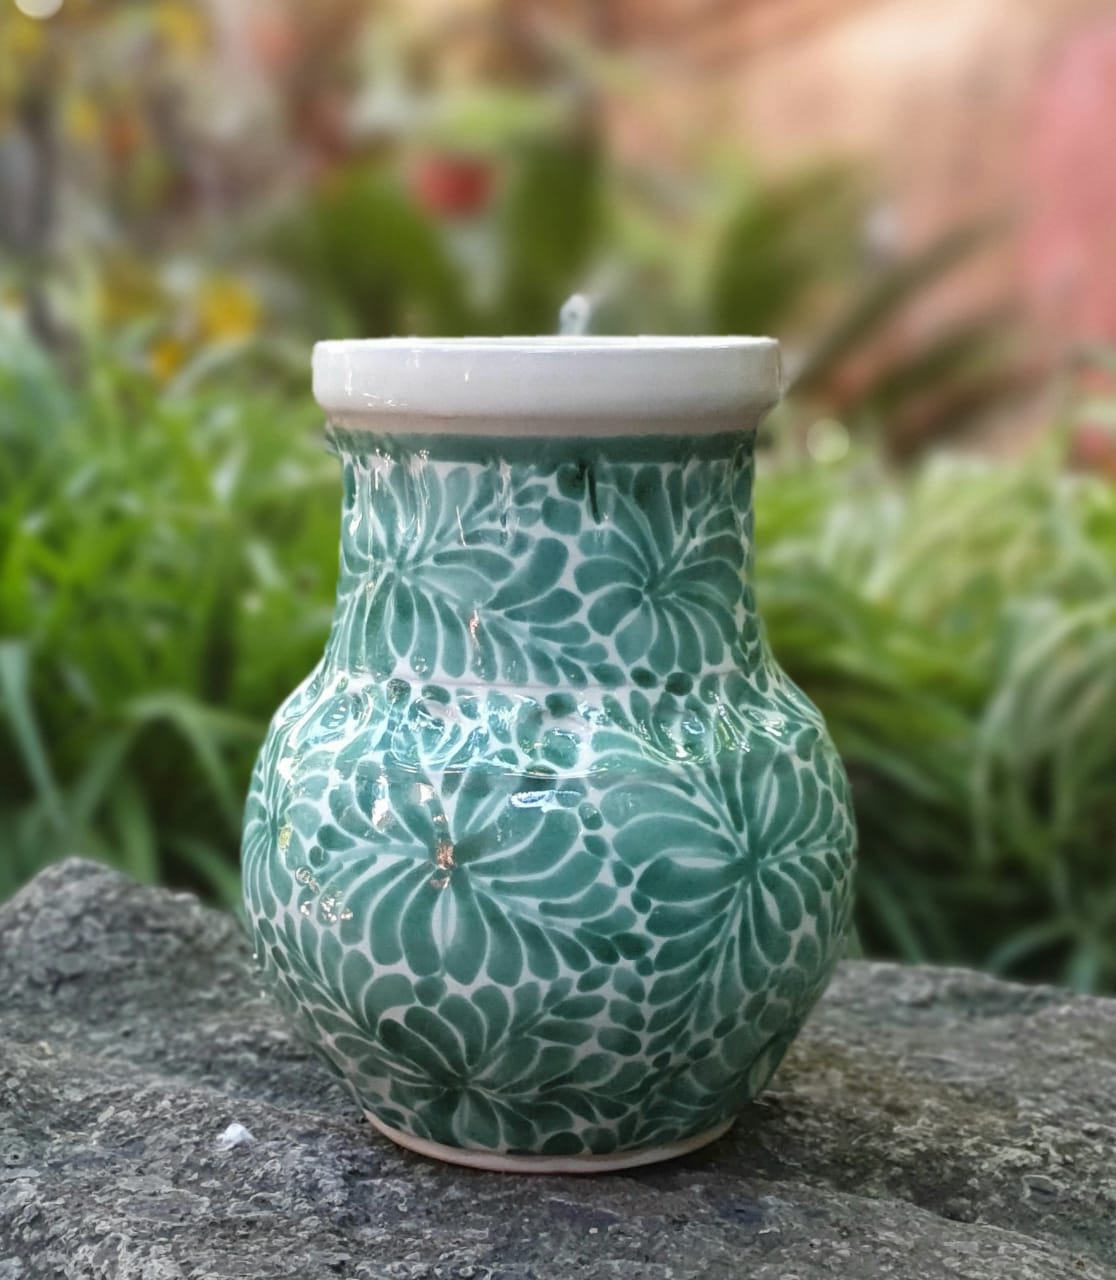 Gorky Pottery Decorative Flower Milestone Pattern Green talavera / handmade mexico Table decor – Gorky Gonzalez